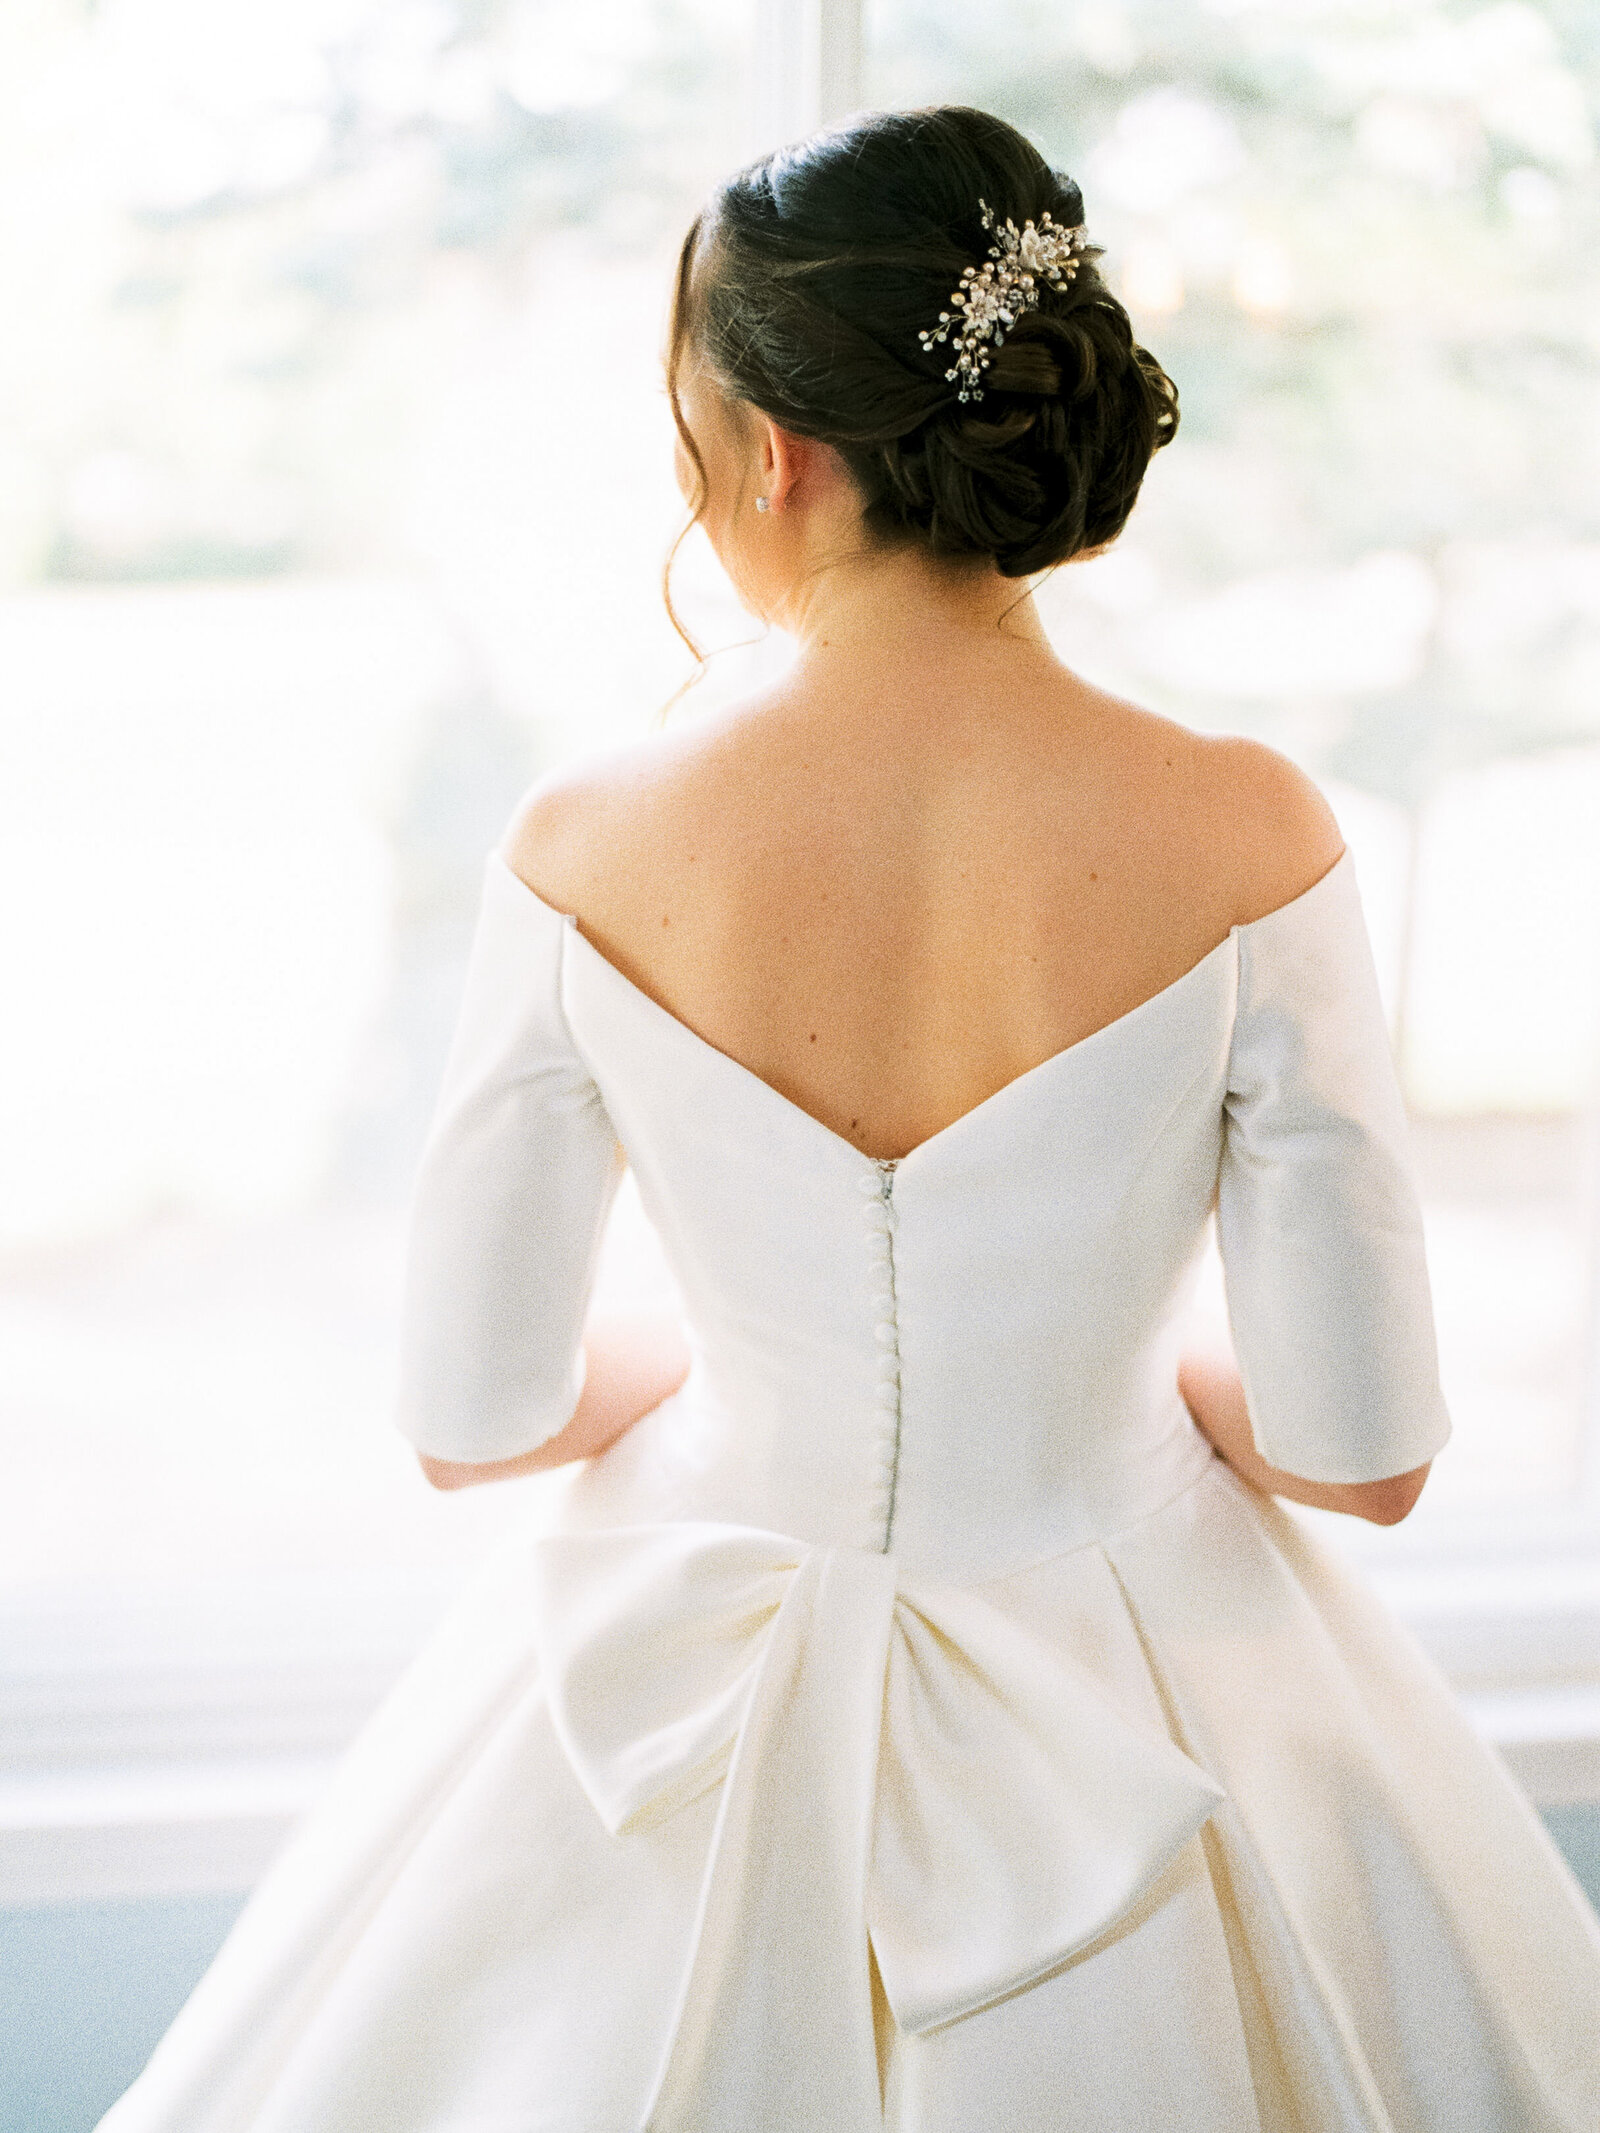 009-sean-cook-wedding-photography-classic-bride-dress